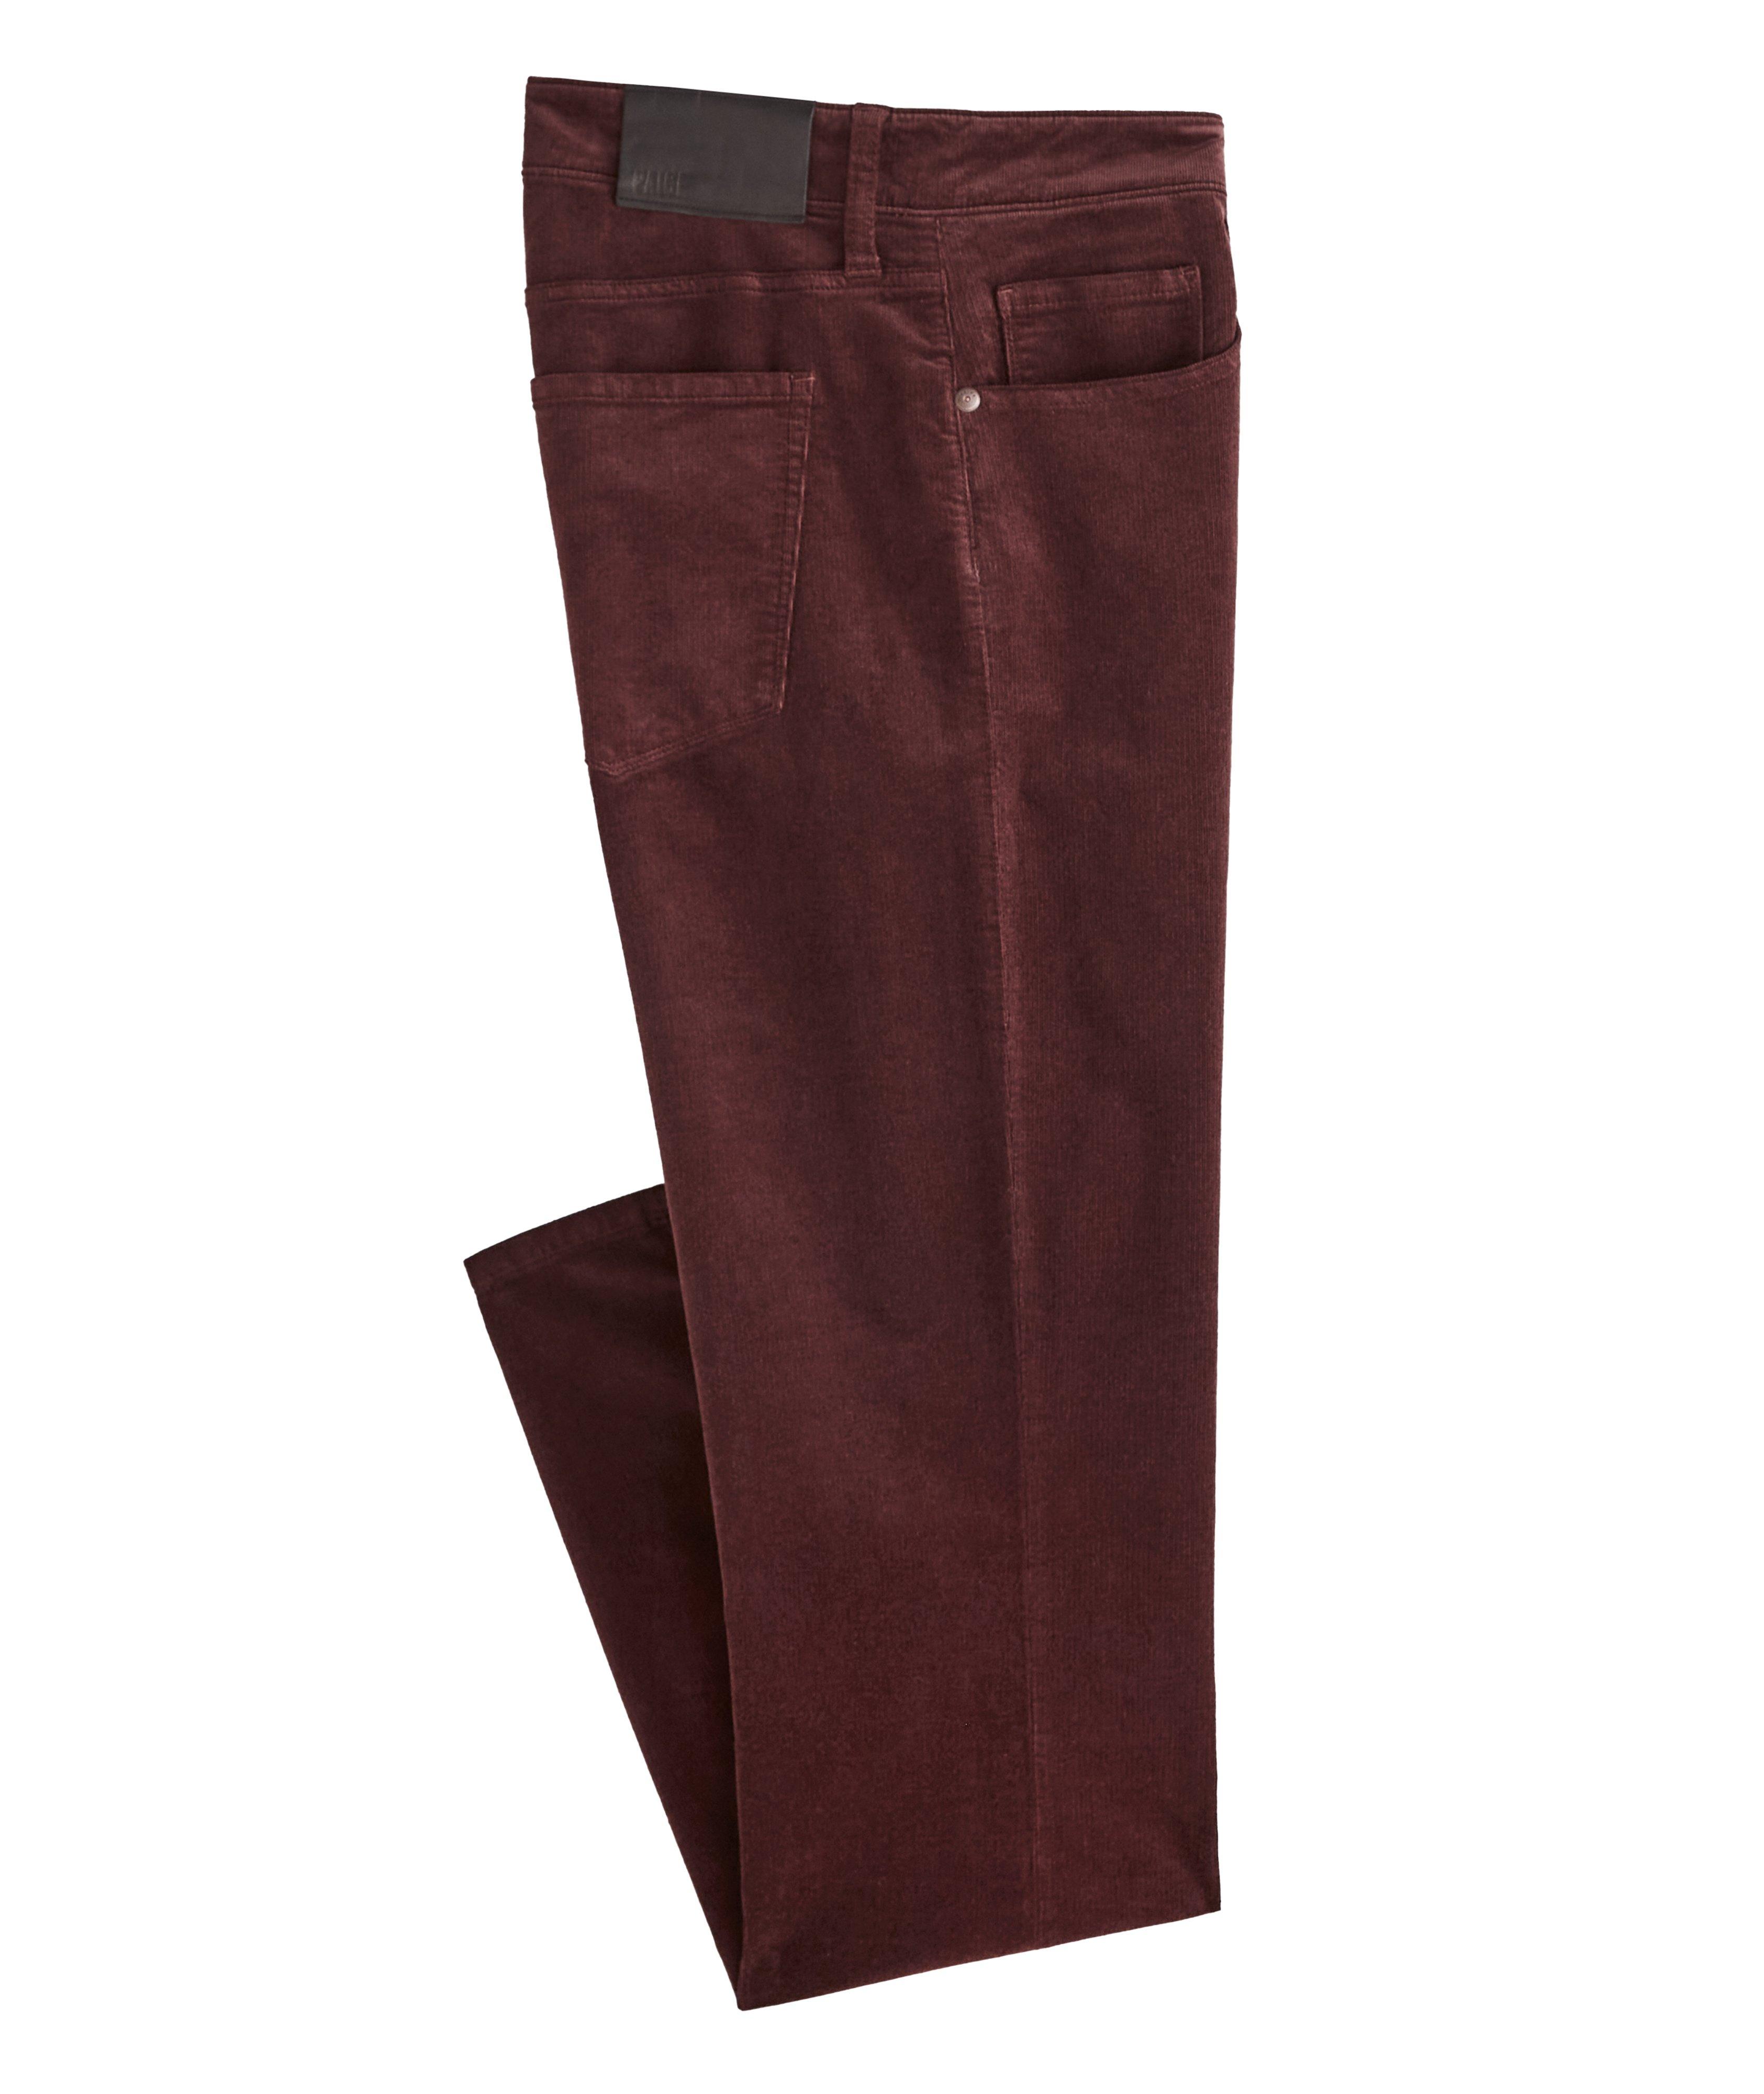 Lennox Slim-Fit Corduroy Jeans  image 0